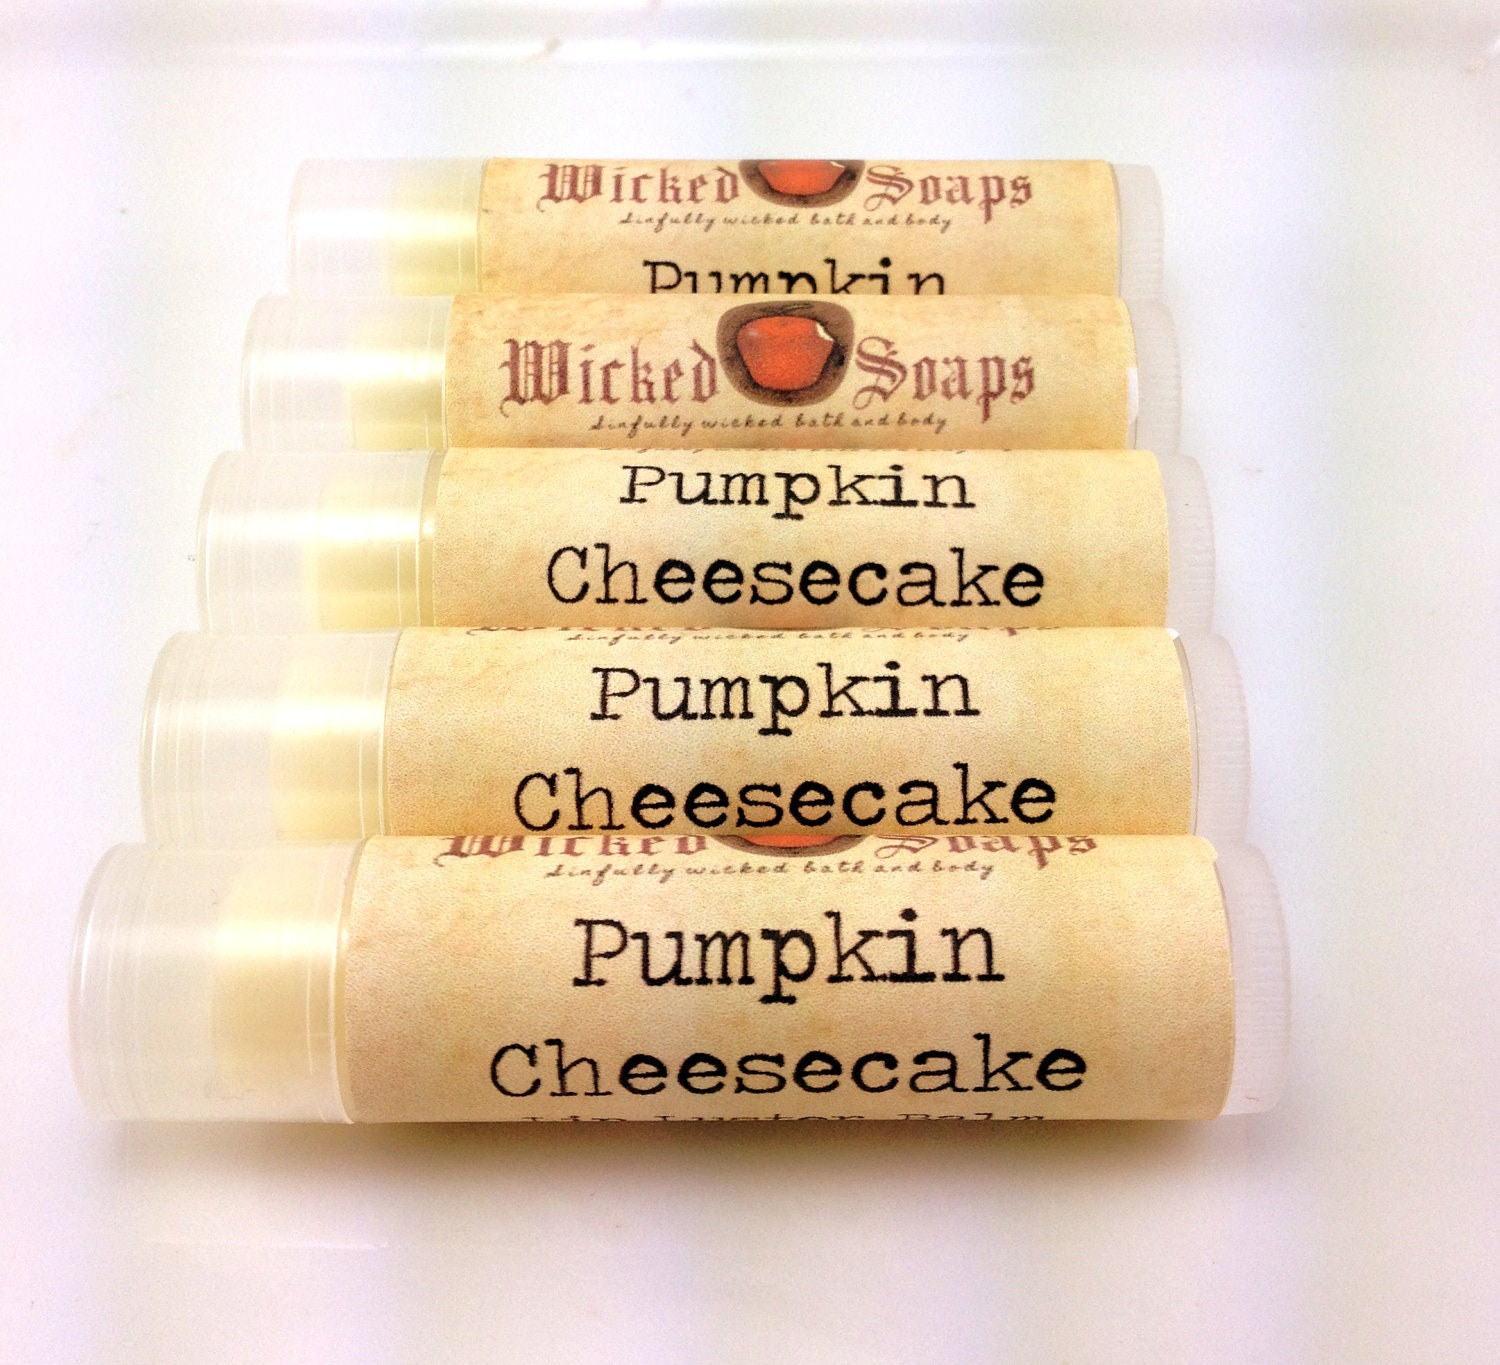 Lip Balm - Pumpkin Cheesecake Lip Balm - Cocoa Butter Beeswax Lip Balm by WickedSoaps - WickedSoaps